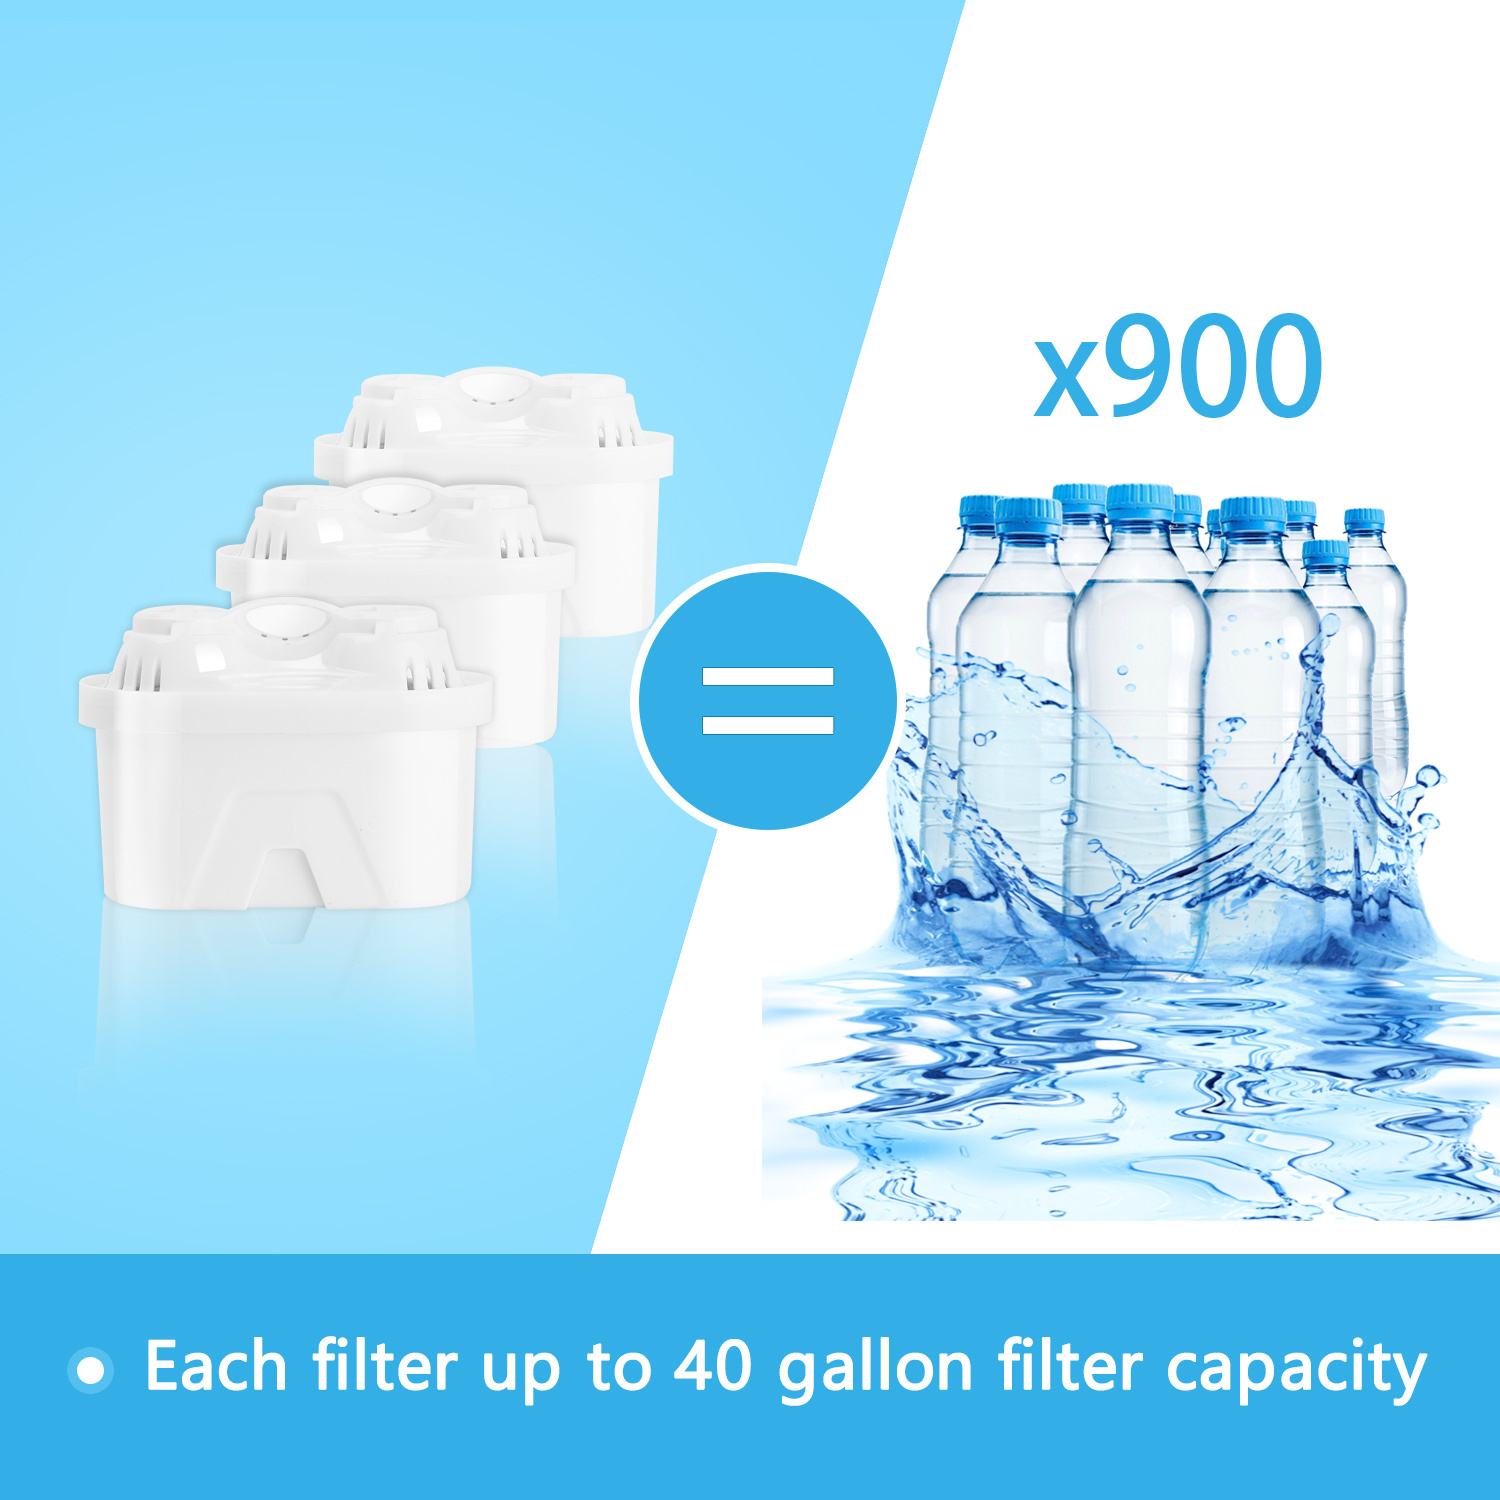 Aigostar Pack de 3 filtros para jarra de agua. Filtros de repuesto para jarra de agua Aigostar, duración 60 días por cada cartucho. Libre de BPA, diseño exclusivo